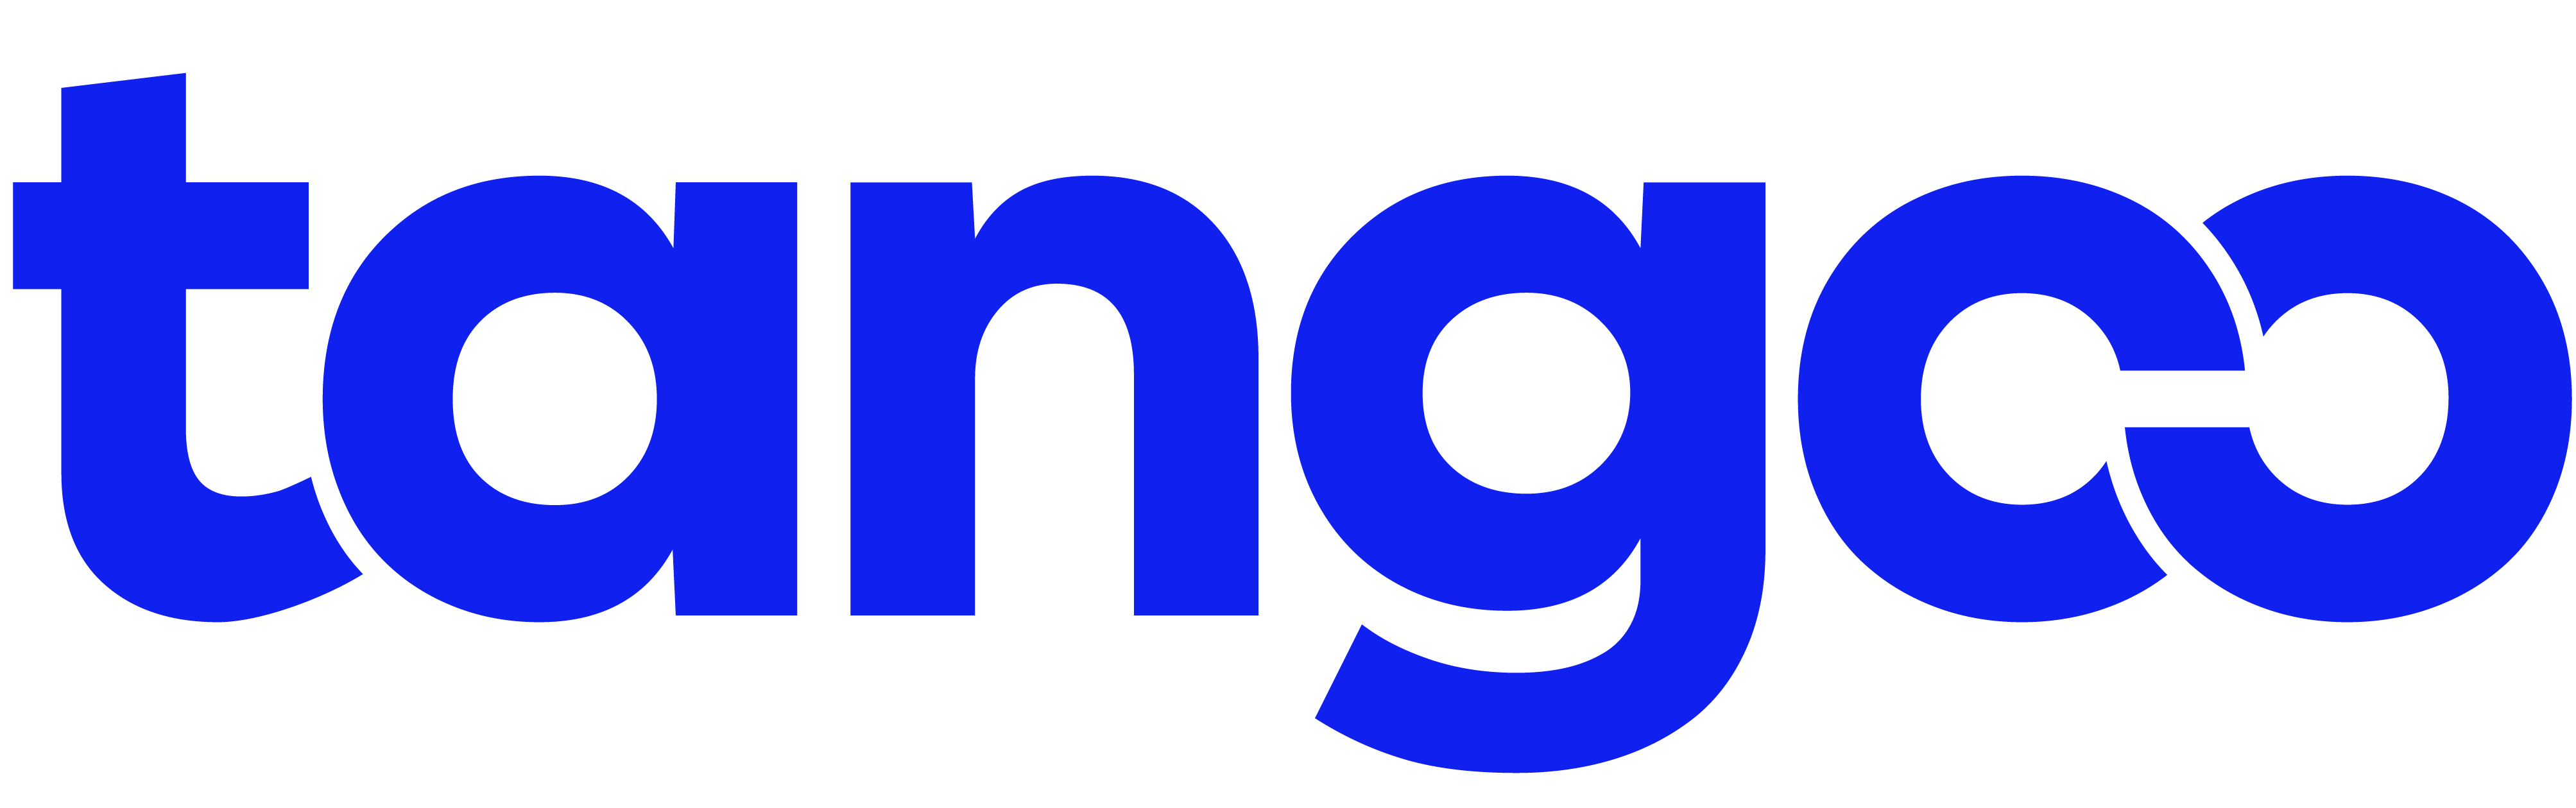 tangoo logo